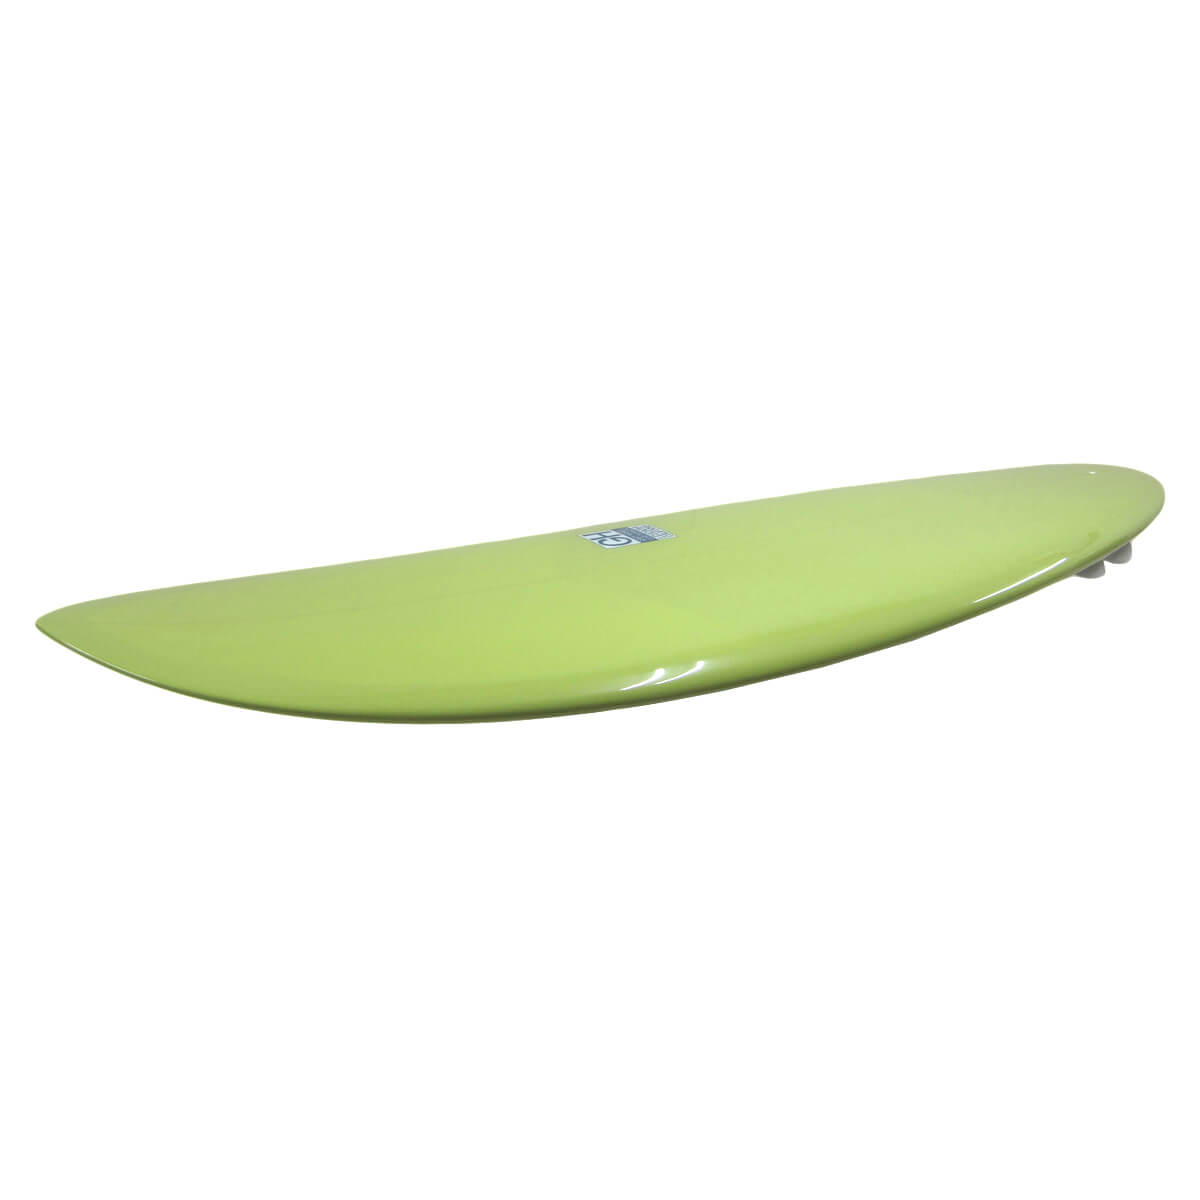 Gary Hanel Surfboards : DIET PILZER 6`6